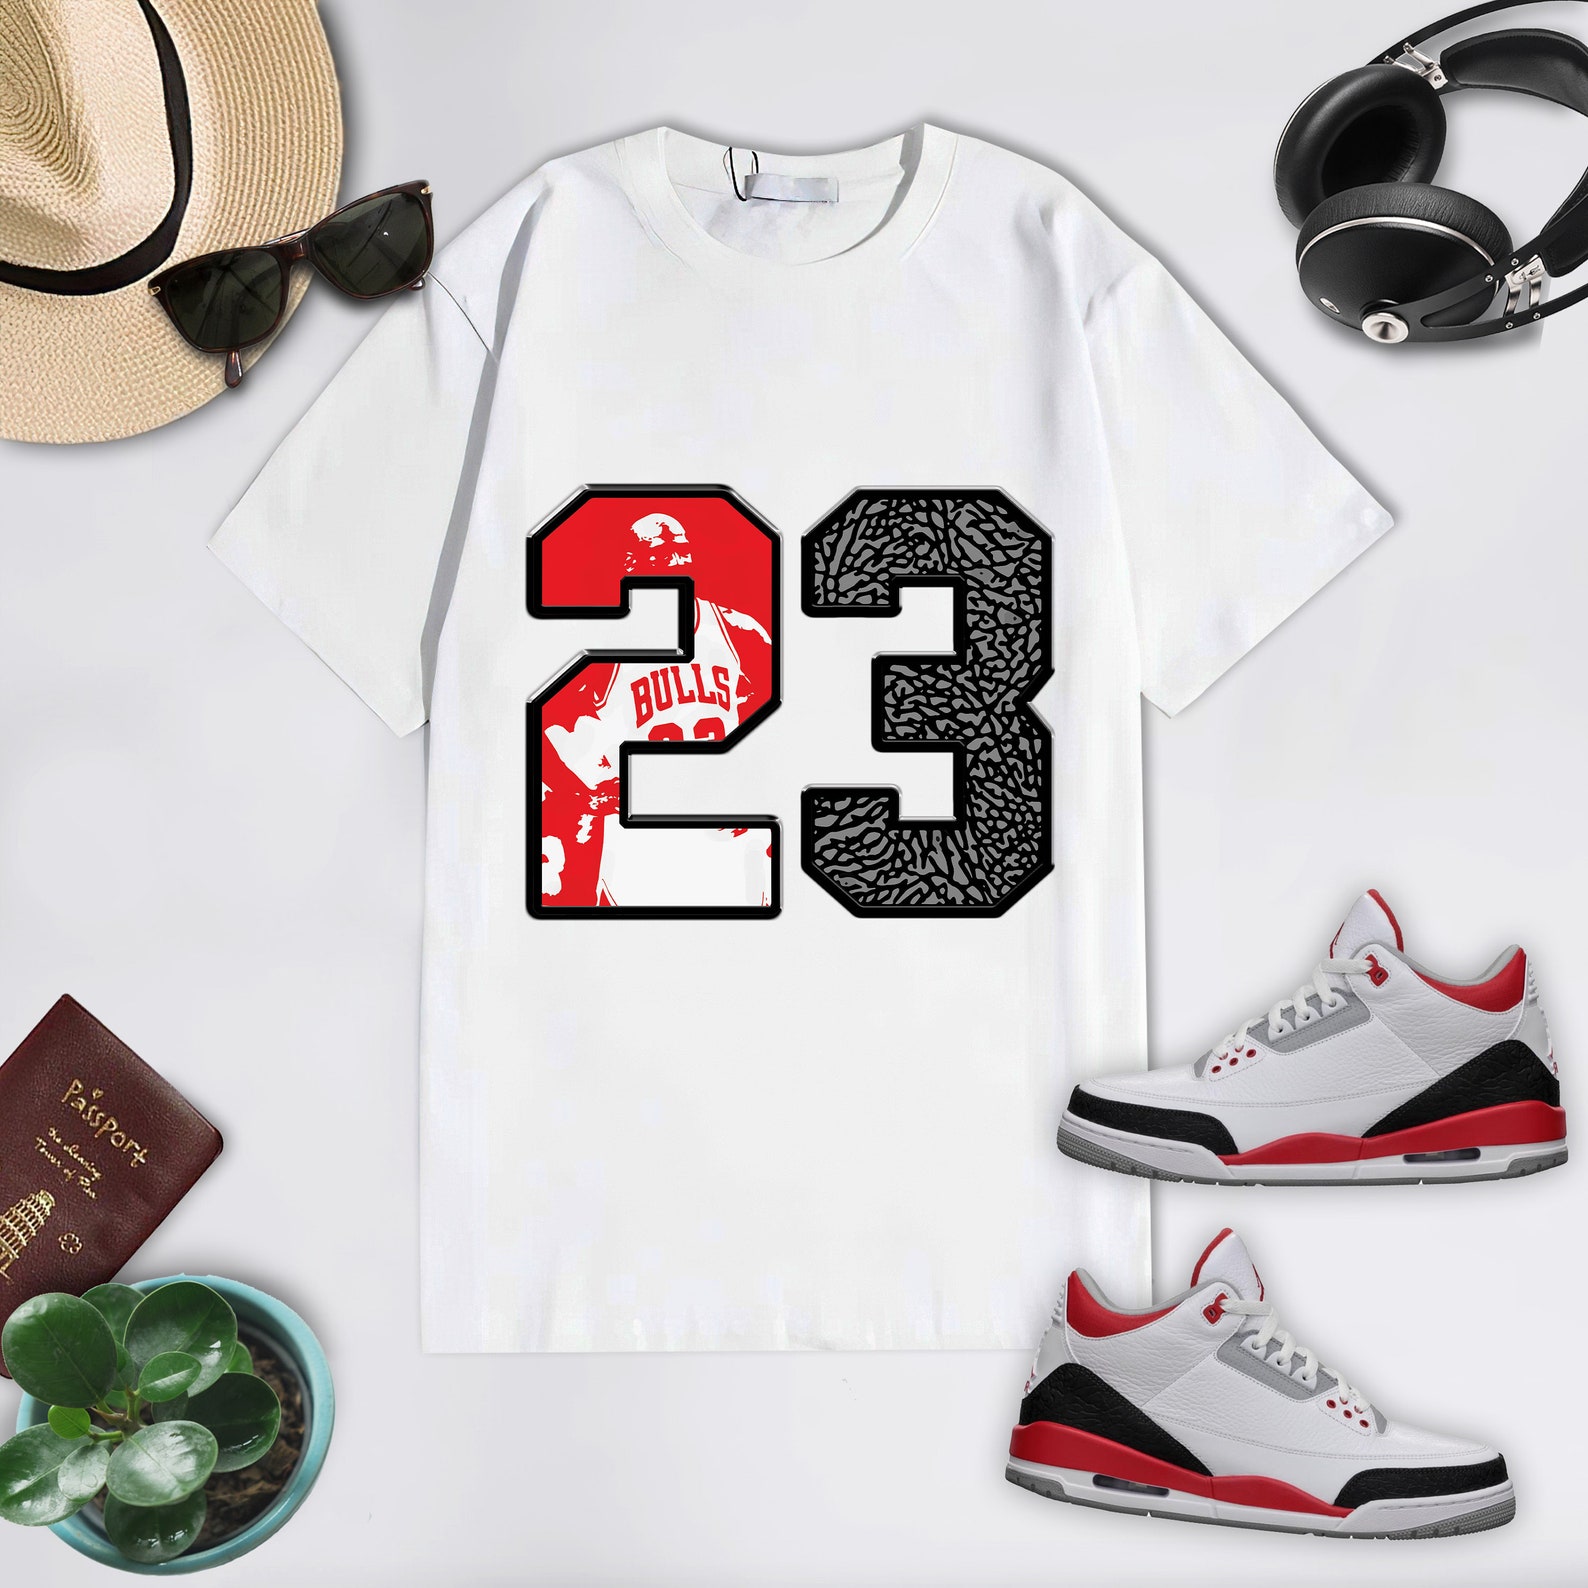 Jordan Air Jordan 3s Fire Red Sneakers Shirt Jordan Air | Etsy